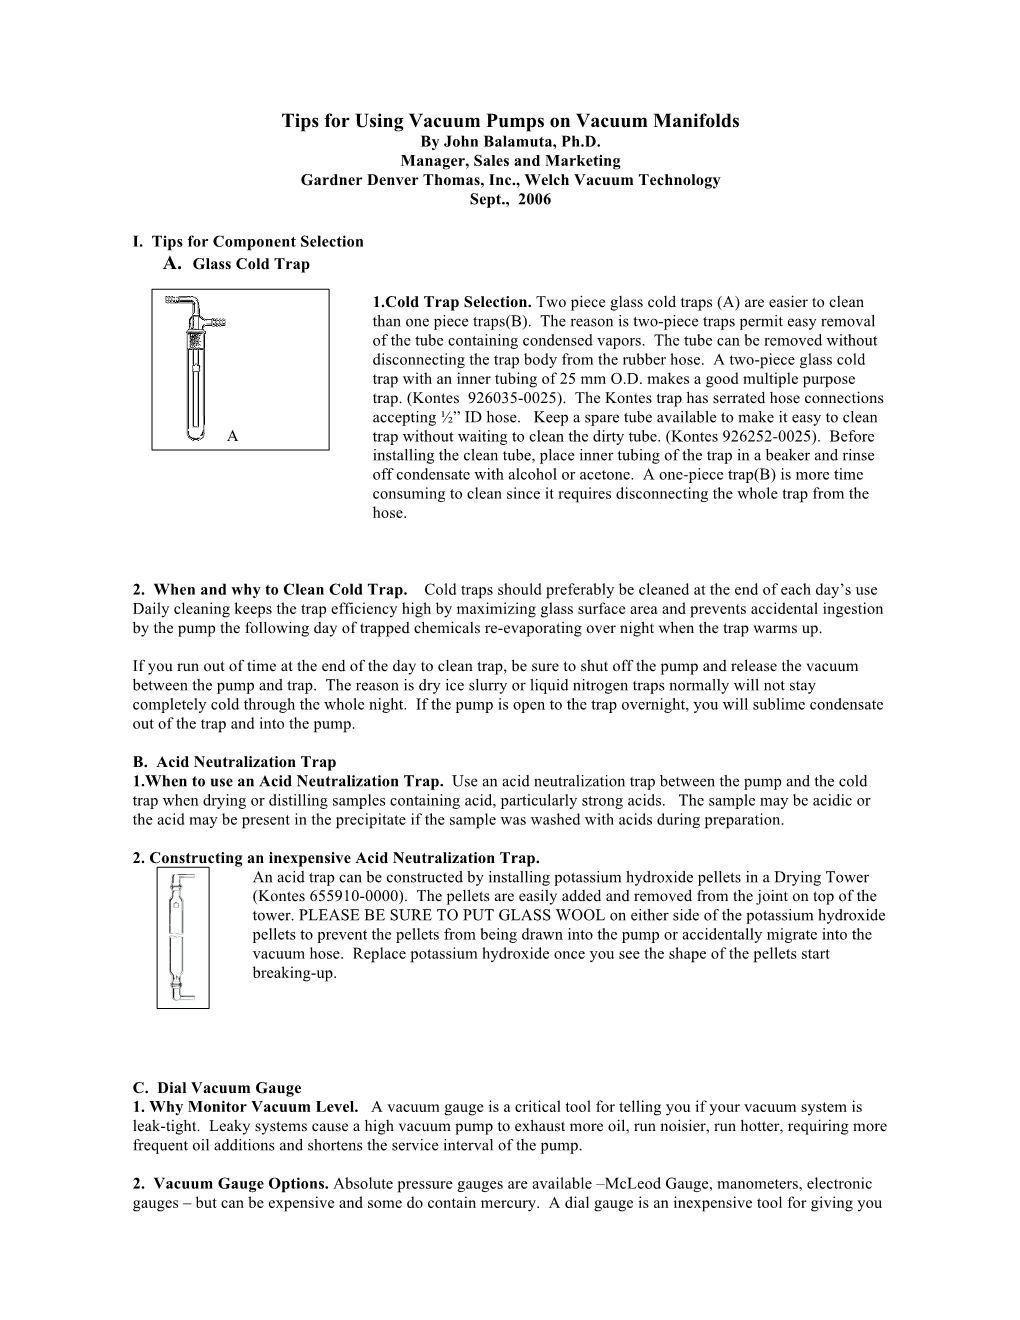 Tips for Using Vacuum Pumps on Vacuum Manifolds by John Balamuta, Ph.D